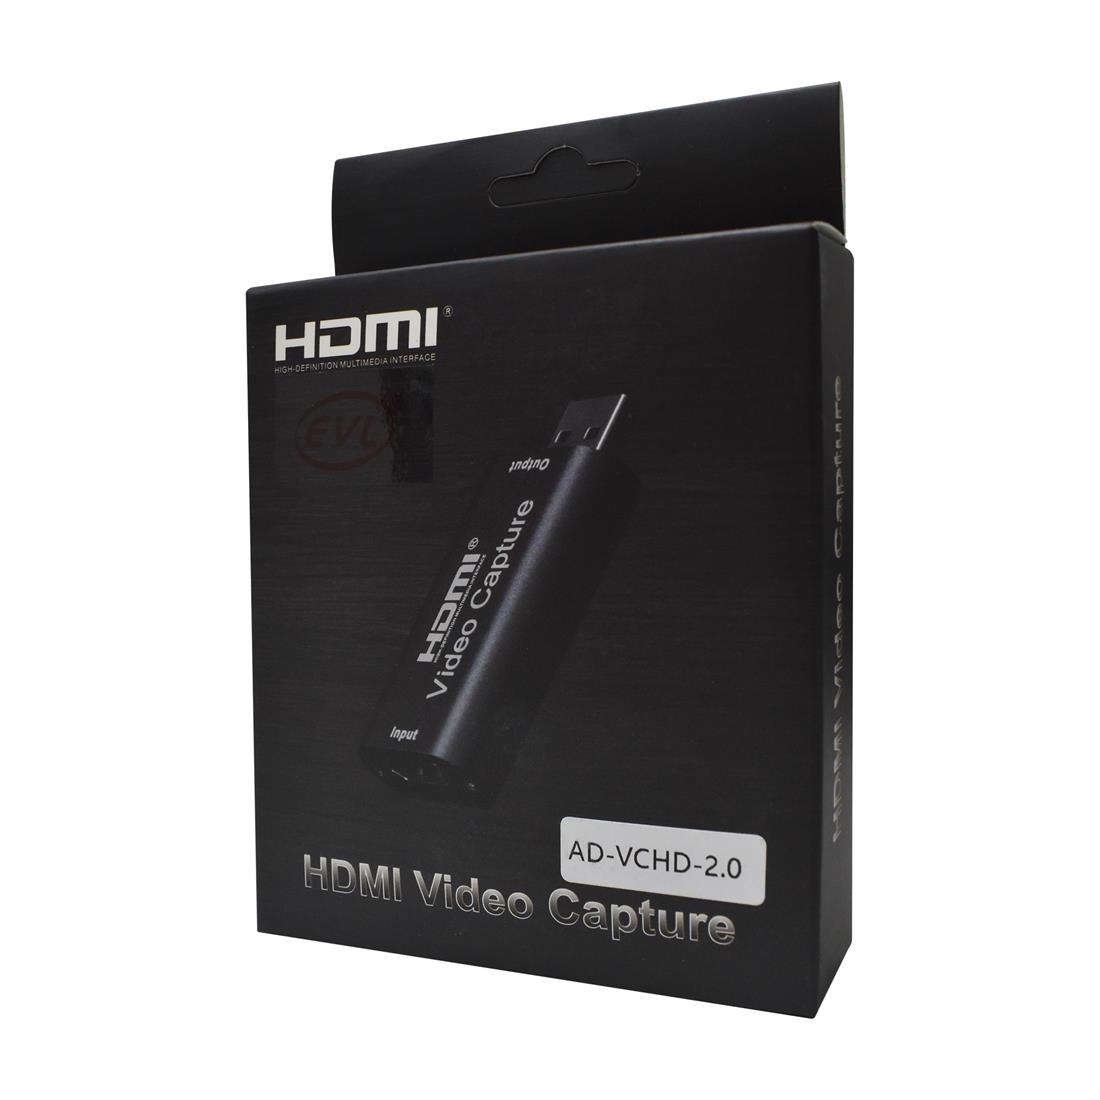 Klack Kapture Capturadora de Vídeo HDMI